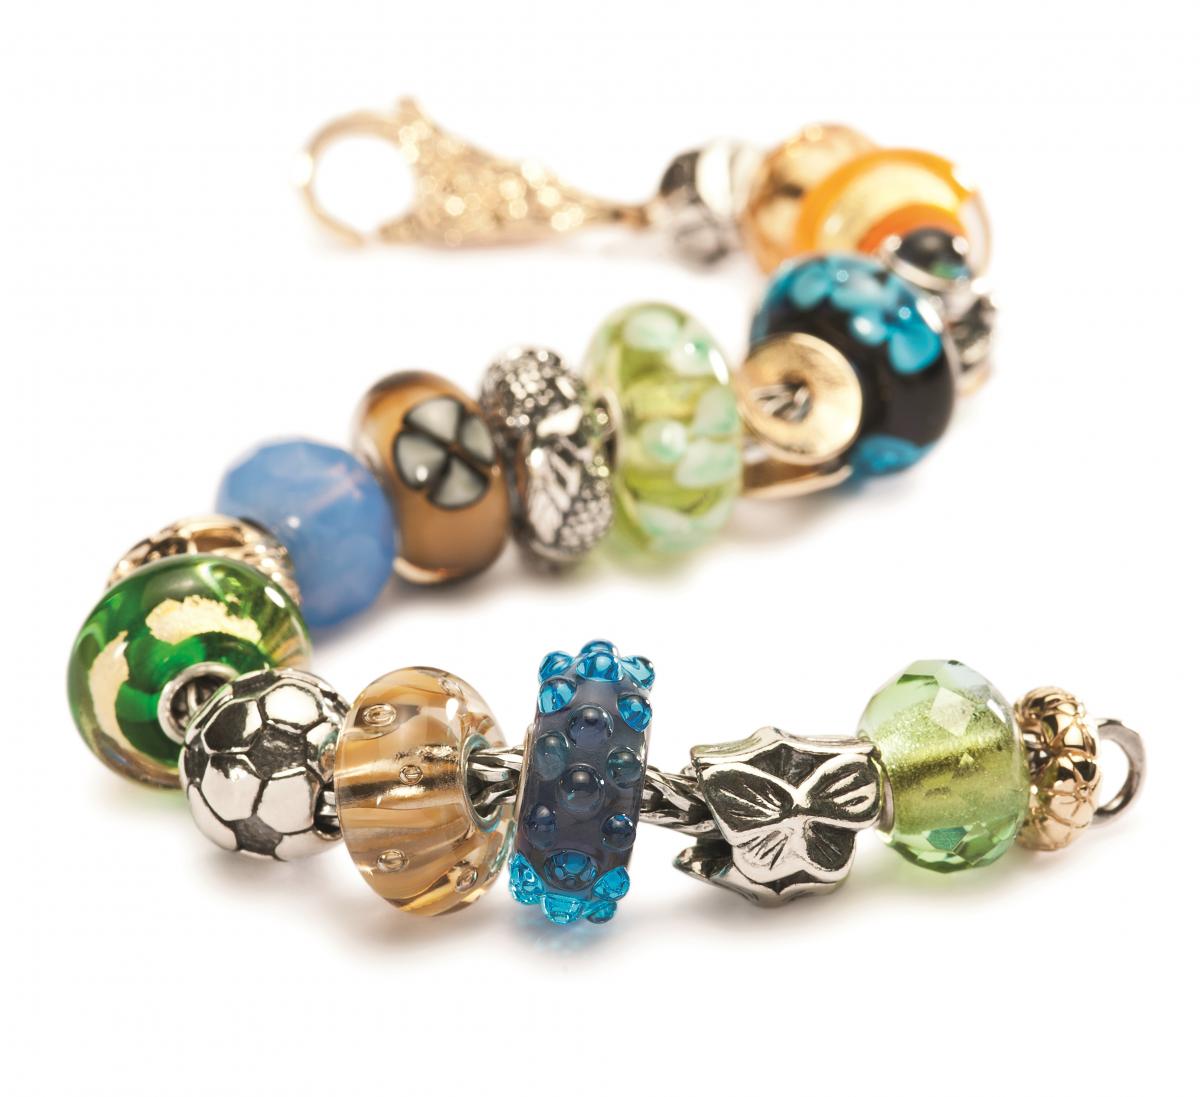 Trollbead, браслеты Trollbead, браслеты из мураснкого стекла, Trollbead сборные браслеты, сборные браслеты